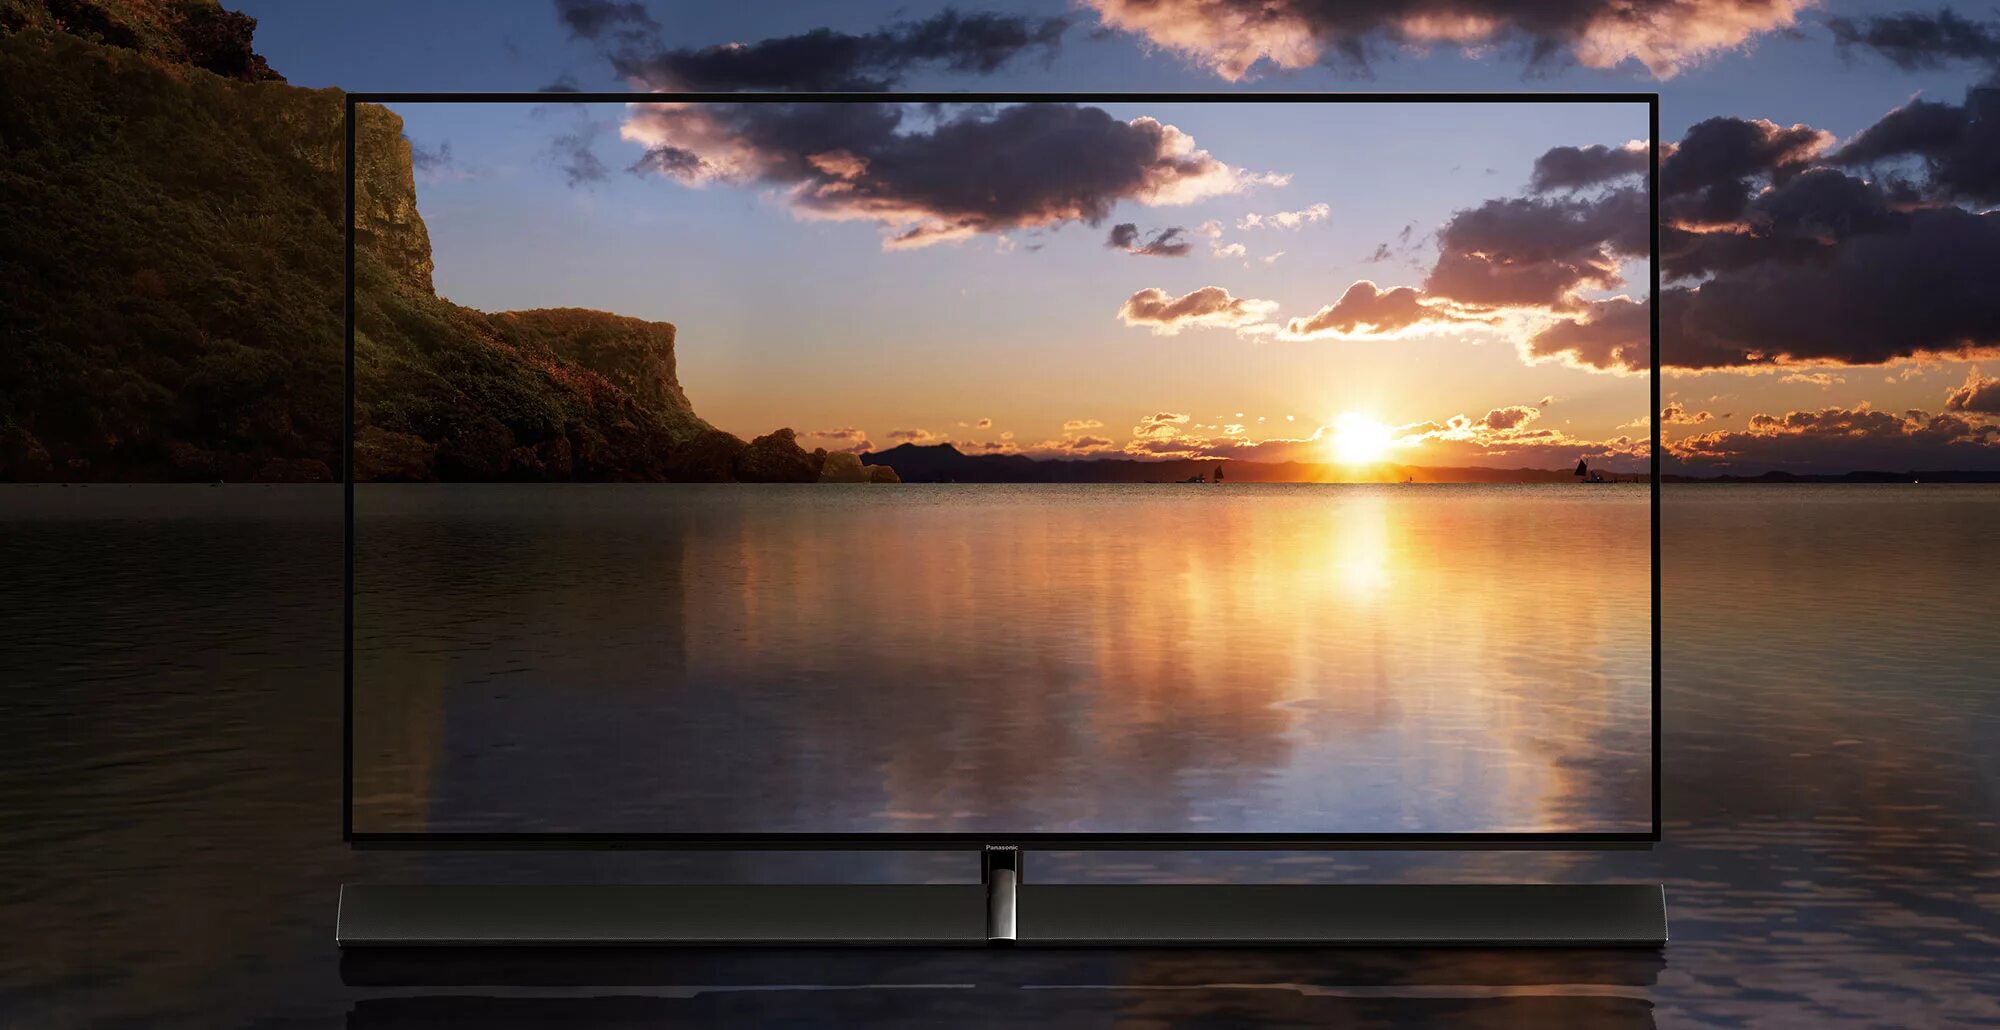 Samsung телевизоры сайт. Телевизор Panasonic 2017 ez1000. OLED телевизор 8к HDR 70 дюймов. Телевизор Тошиба 65 олед.